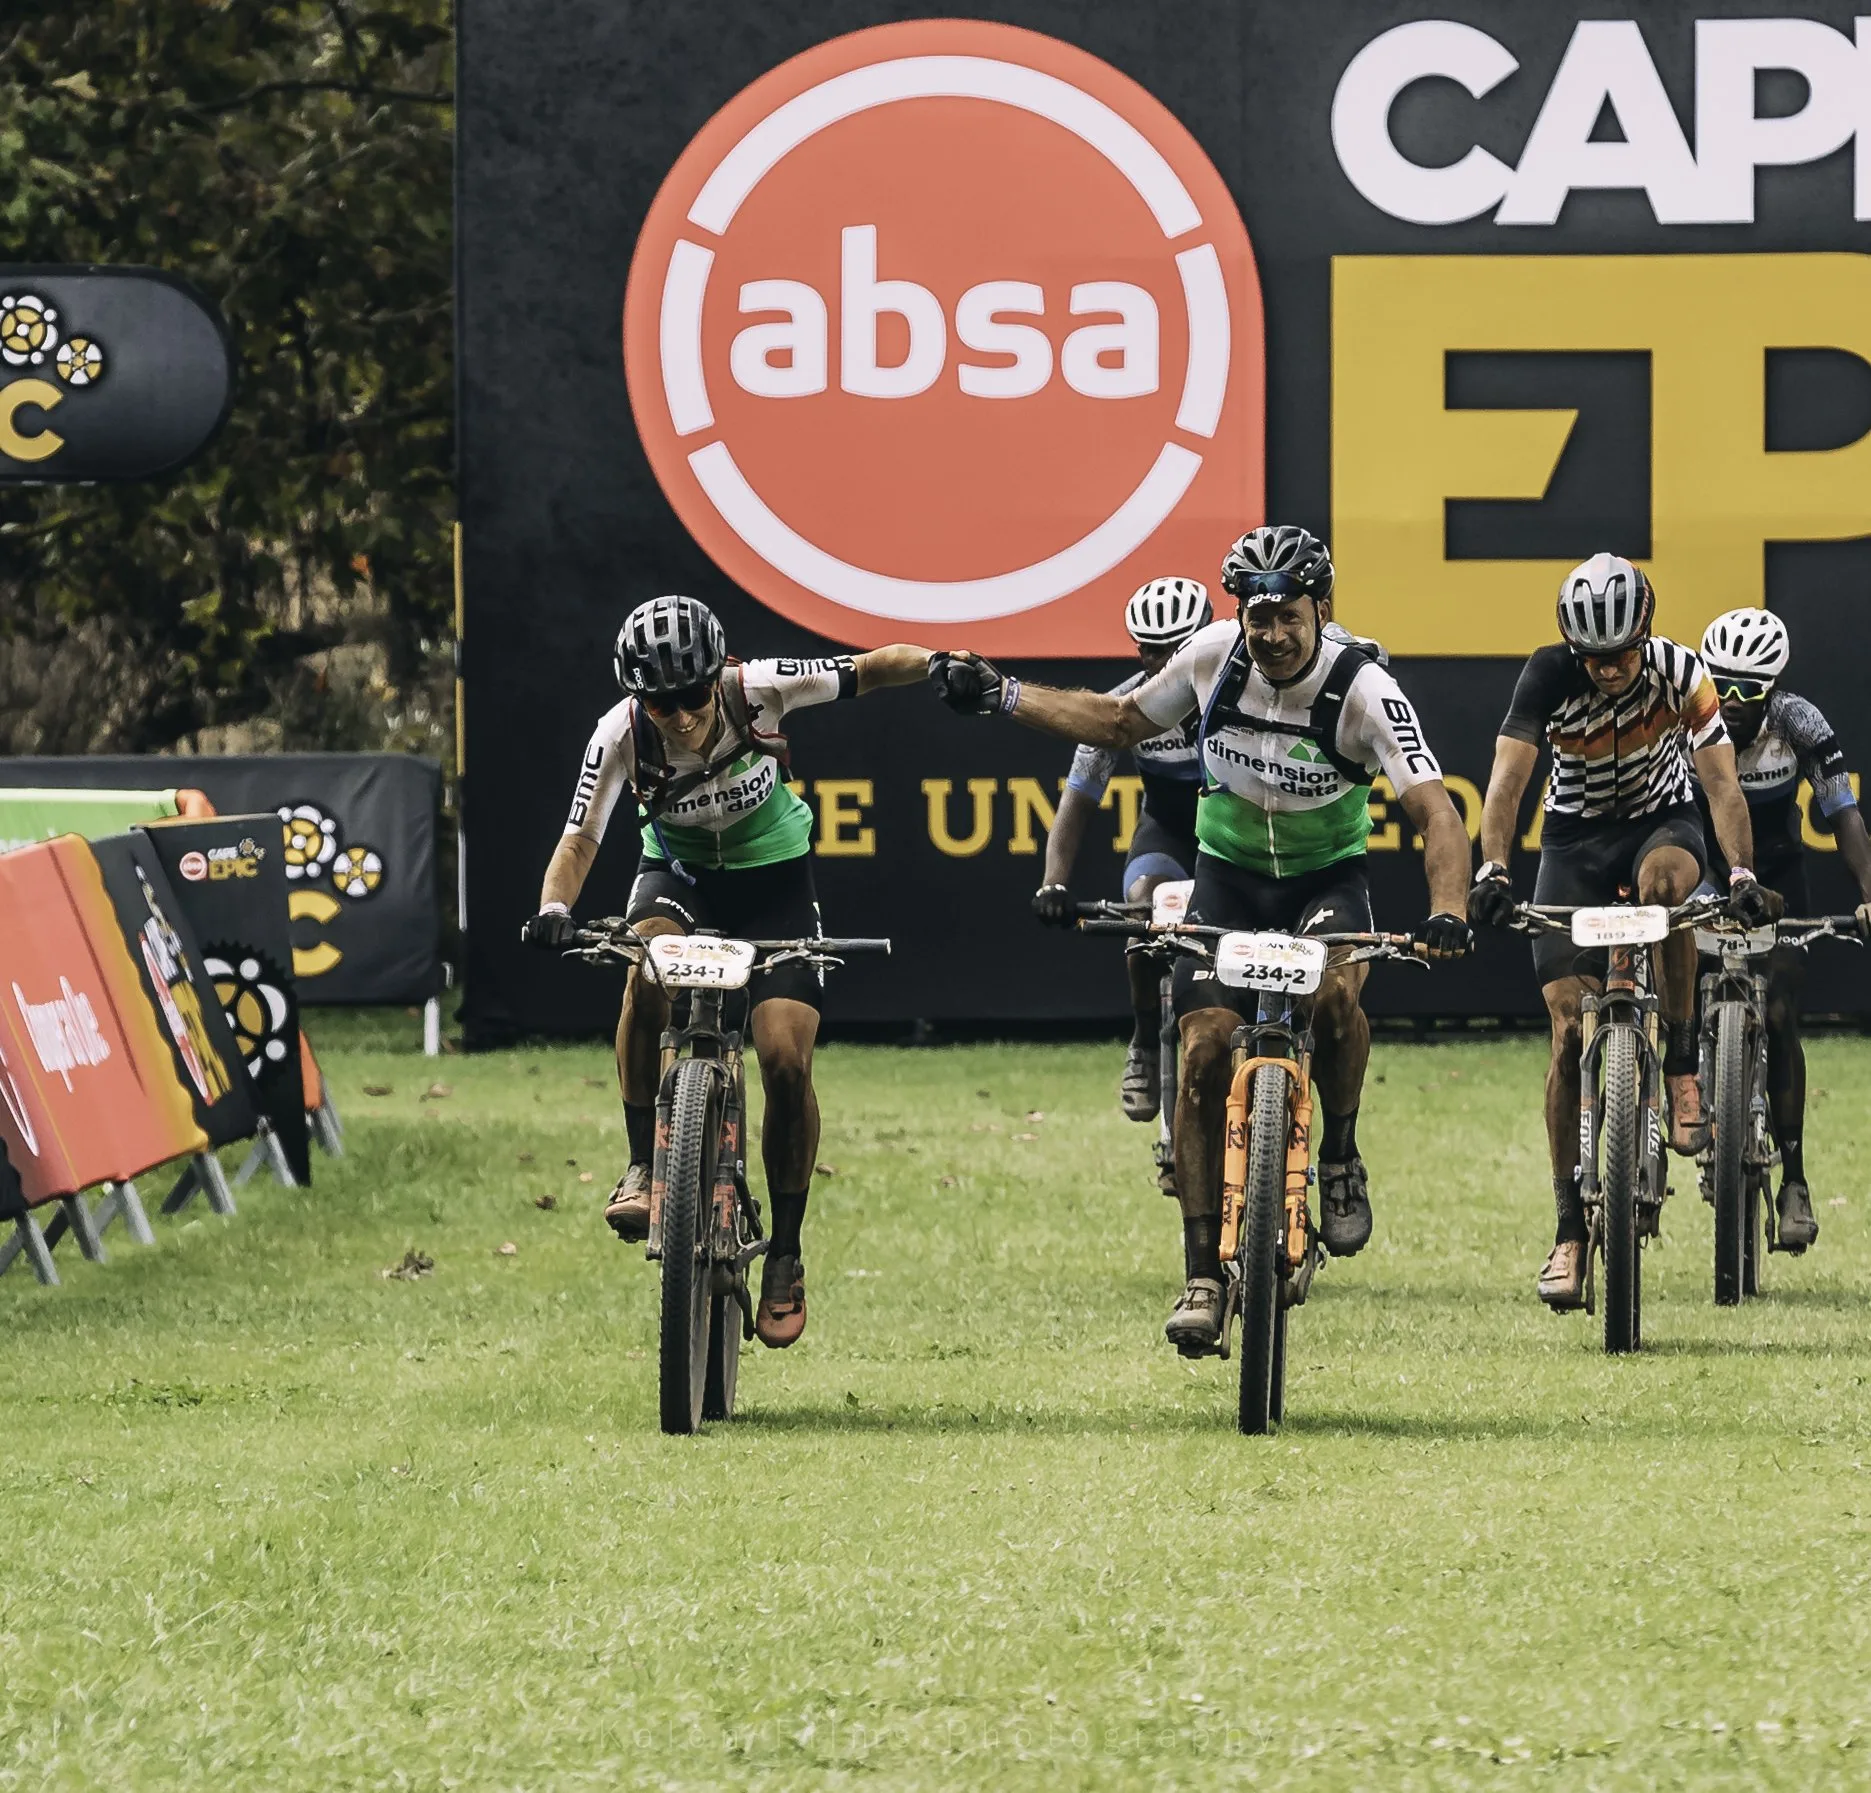 Cape Epic 2019: The World’s Premier Mountain Bike Race